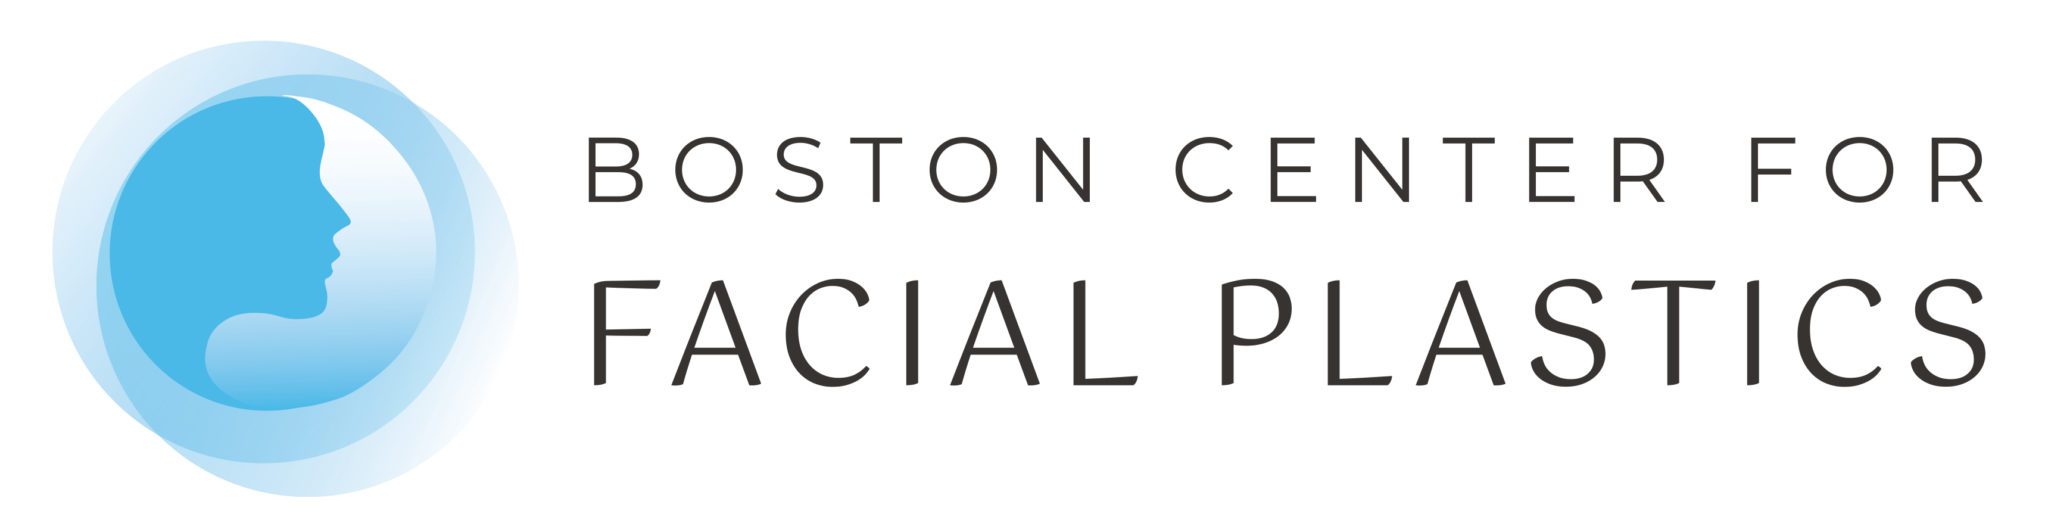 Boston Center for Facial Plastics Logo Mobile Version 3